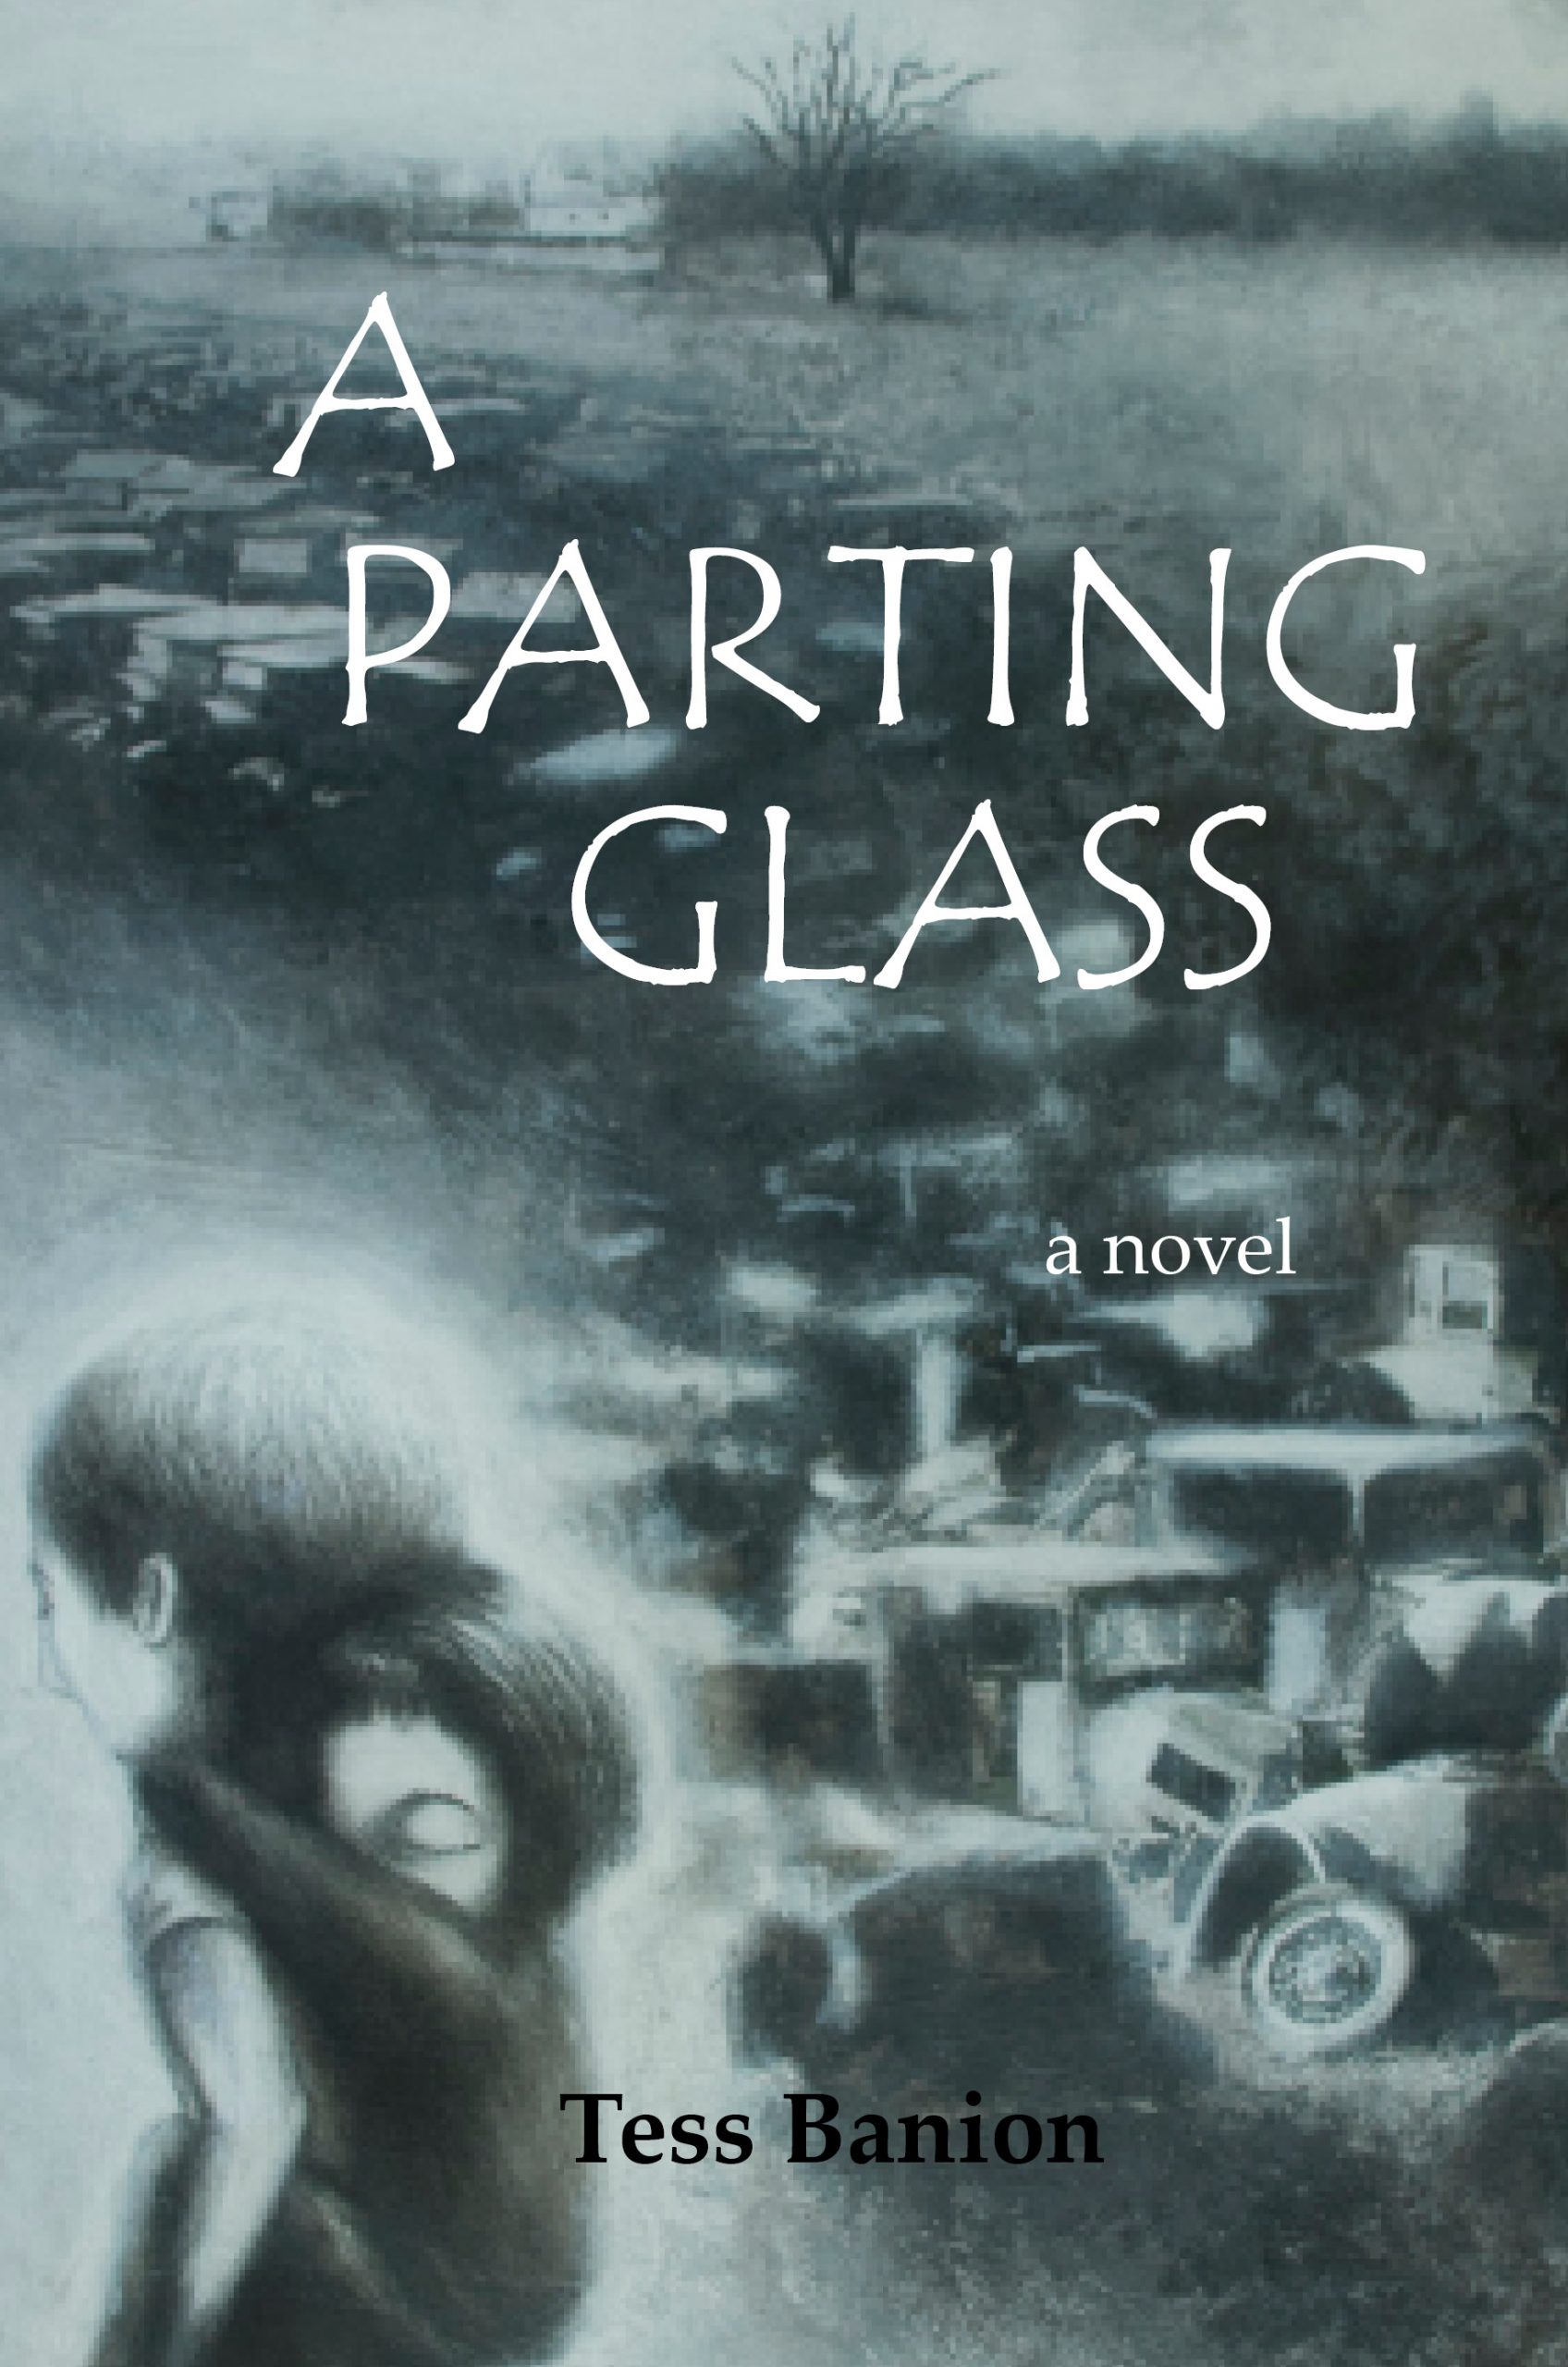 A Parting Glass - a novel by Tess Banion